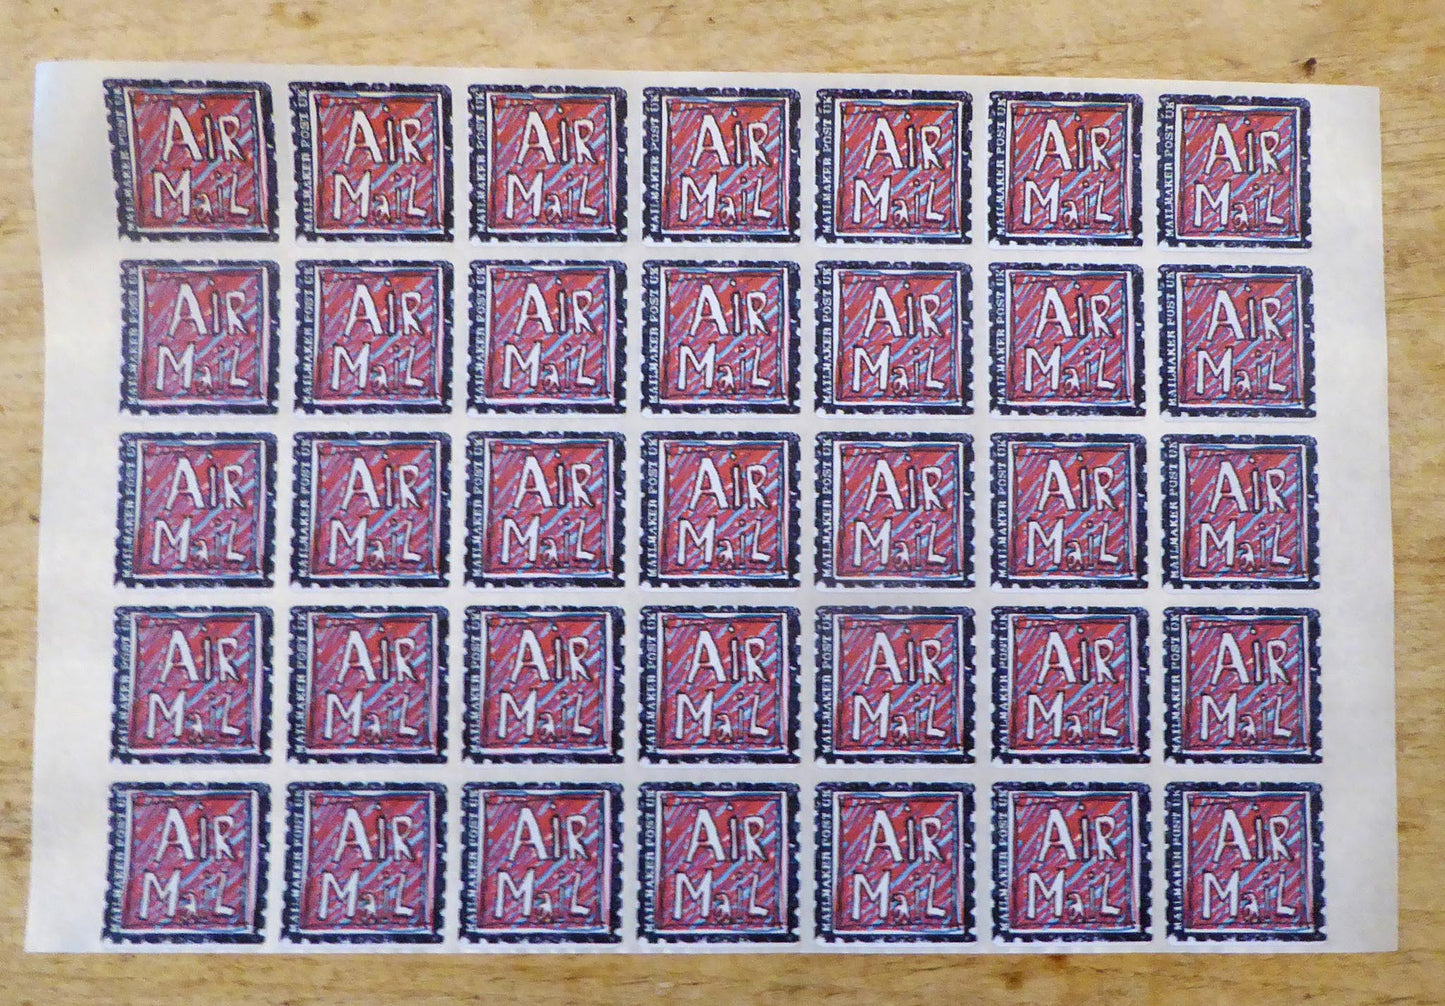 Faux Postage Stamps - Air Mail - Cinderella Stamps - Mail Art - Handmade by Norfolk Artist Debbie Osborn